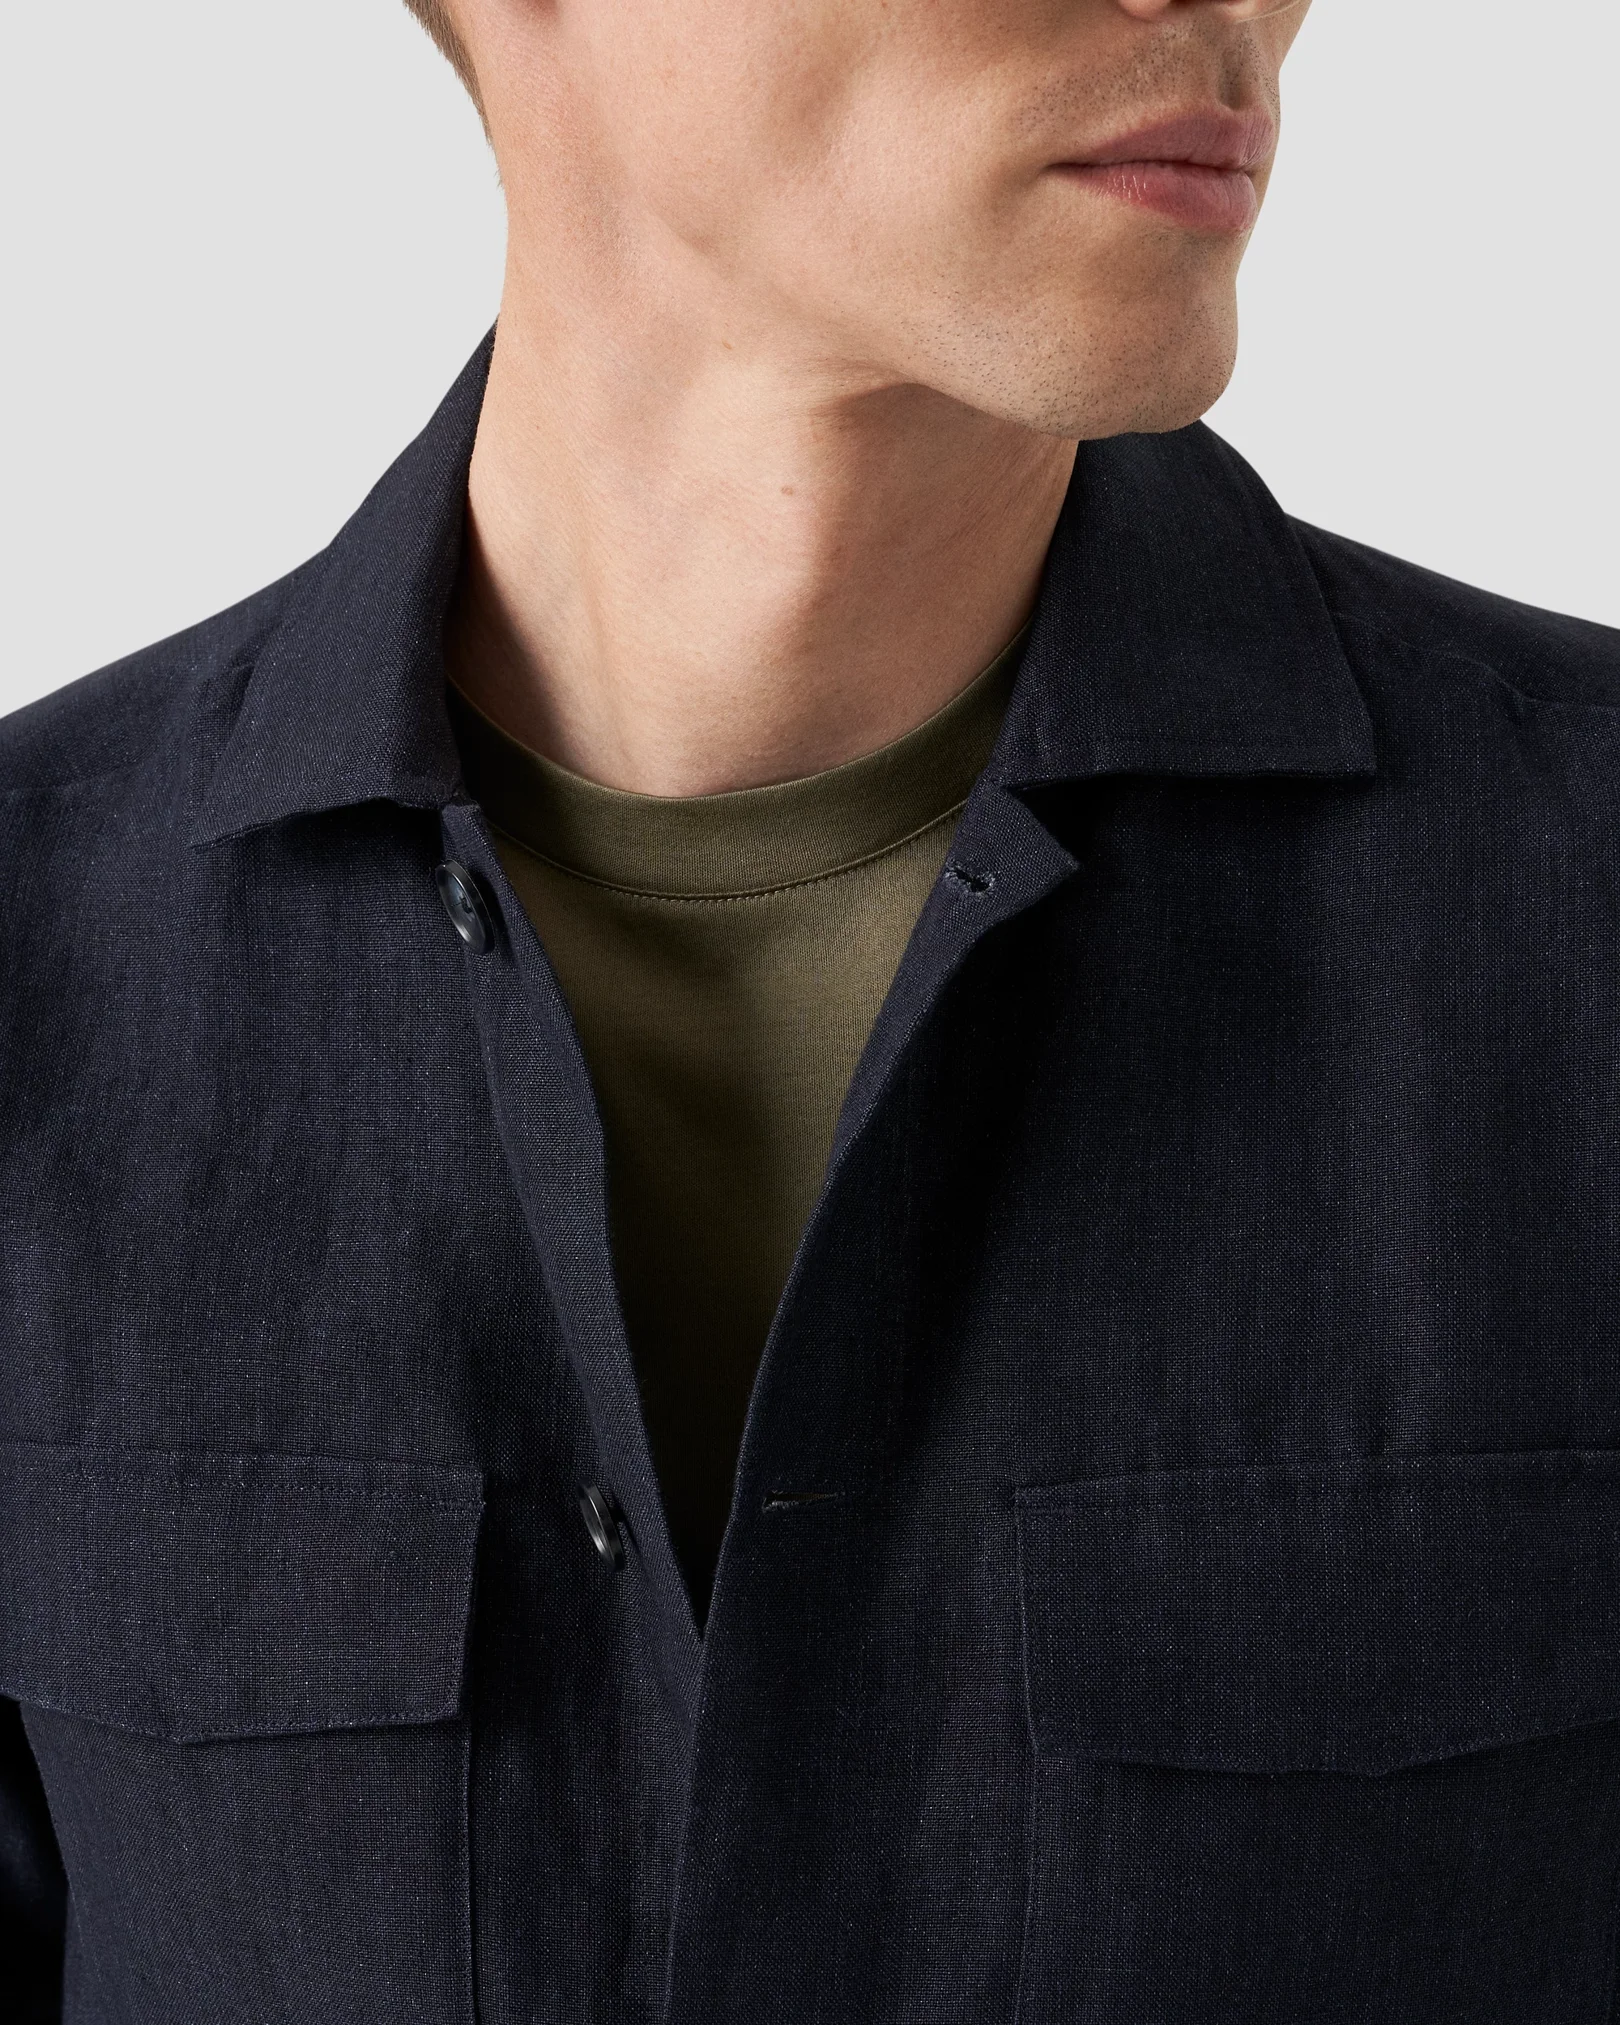 Eton - dark green crew neck short sleeve t shirt